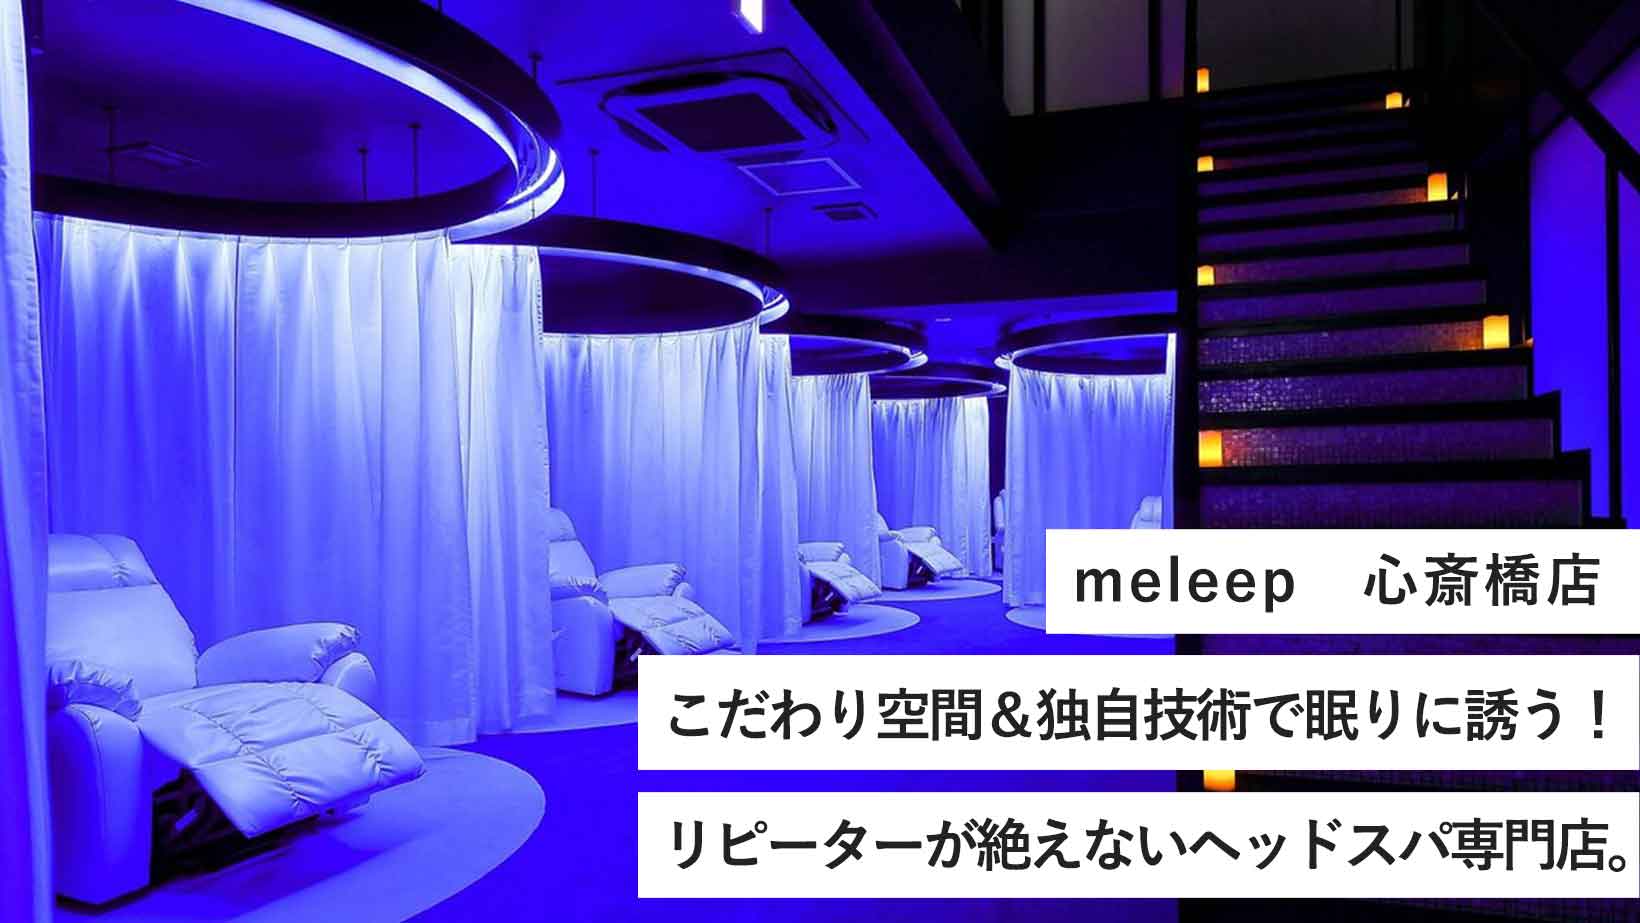 meleep/こだわり空間＆独自技術で眠りに誘う！リピーターが絶えないヘッドスパ専門店。